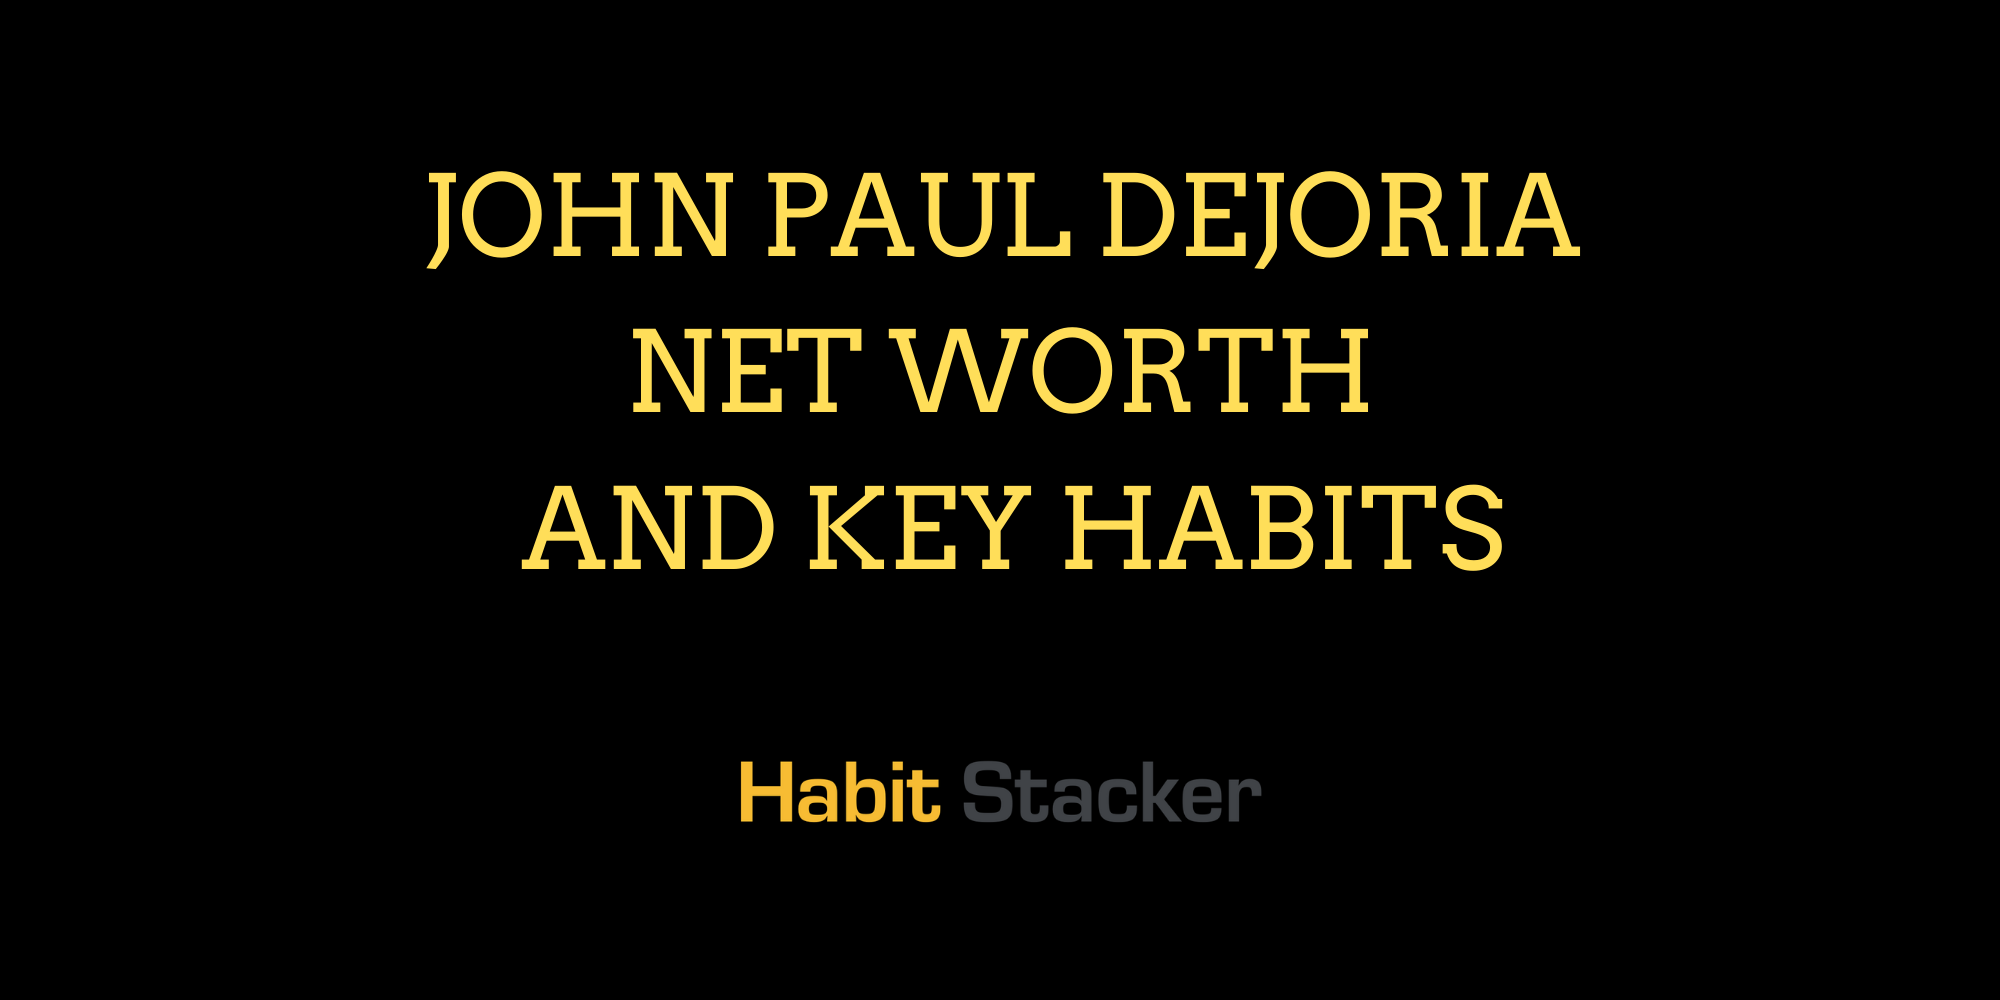 John Paul Dejoria Net Worth and Key Habits